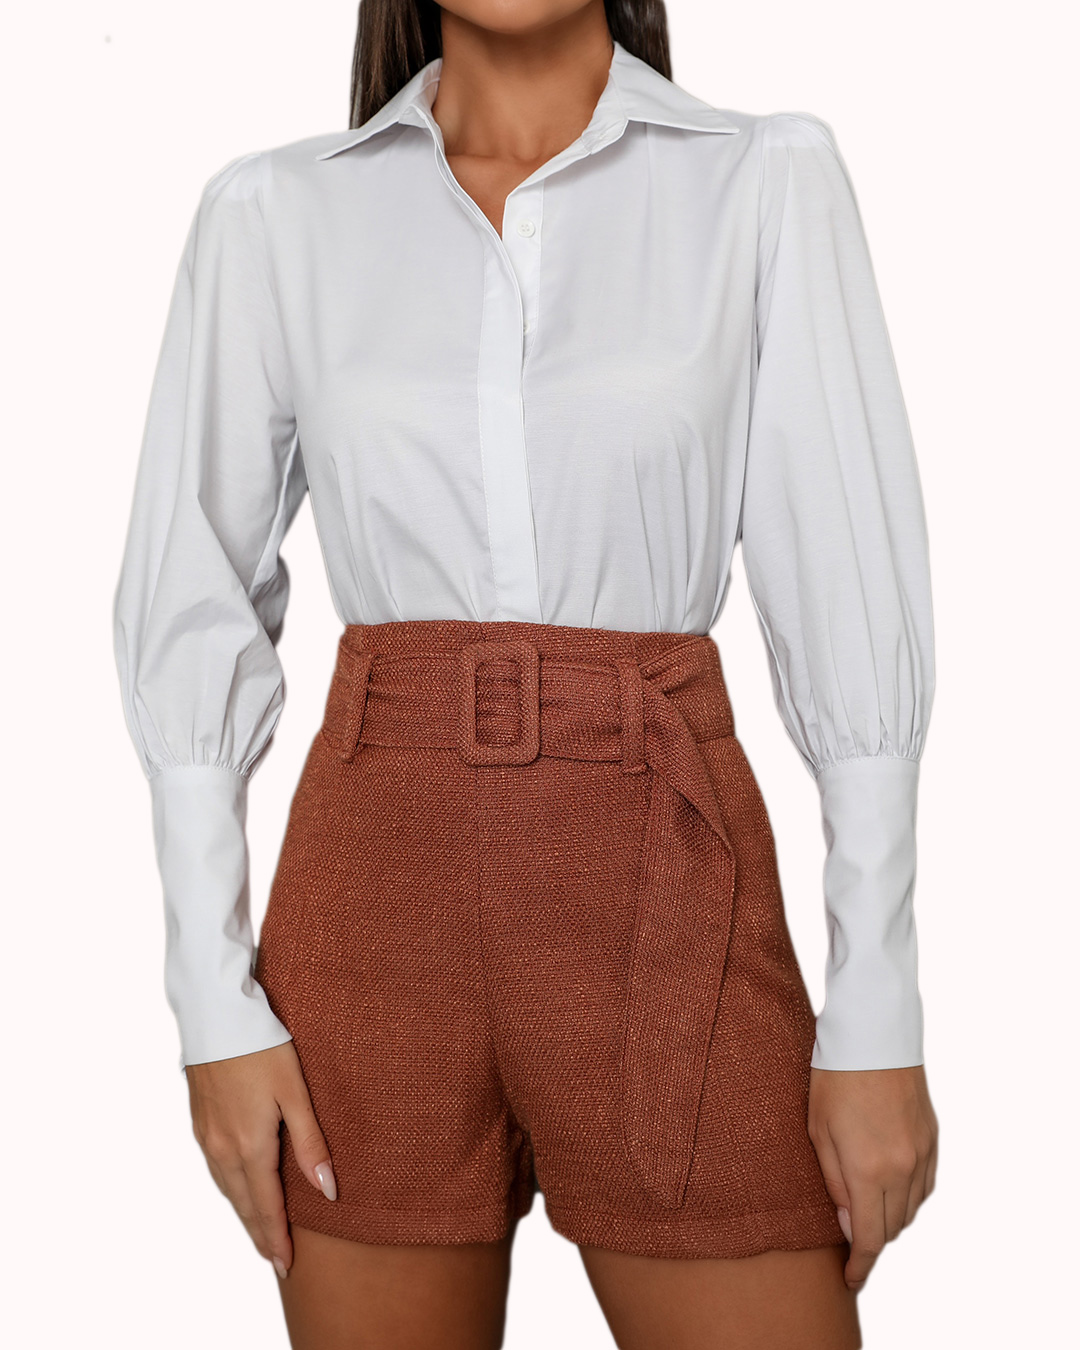 Dot Clothing - Shorts Dot Clothing Cintura Alta Marrom - 1607MARR